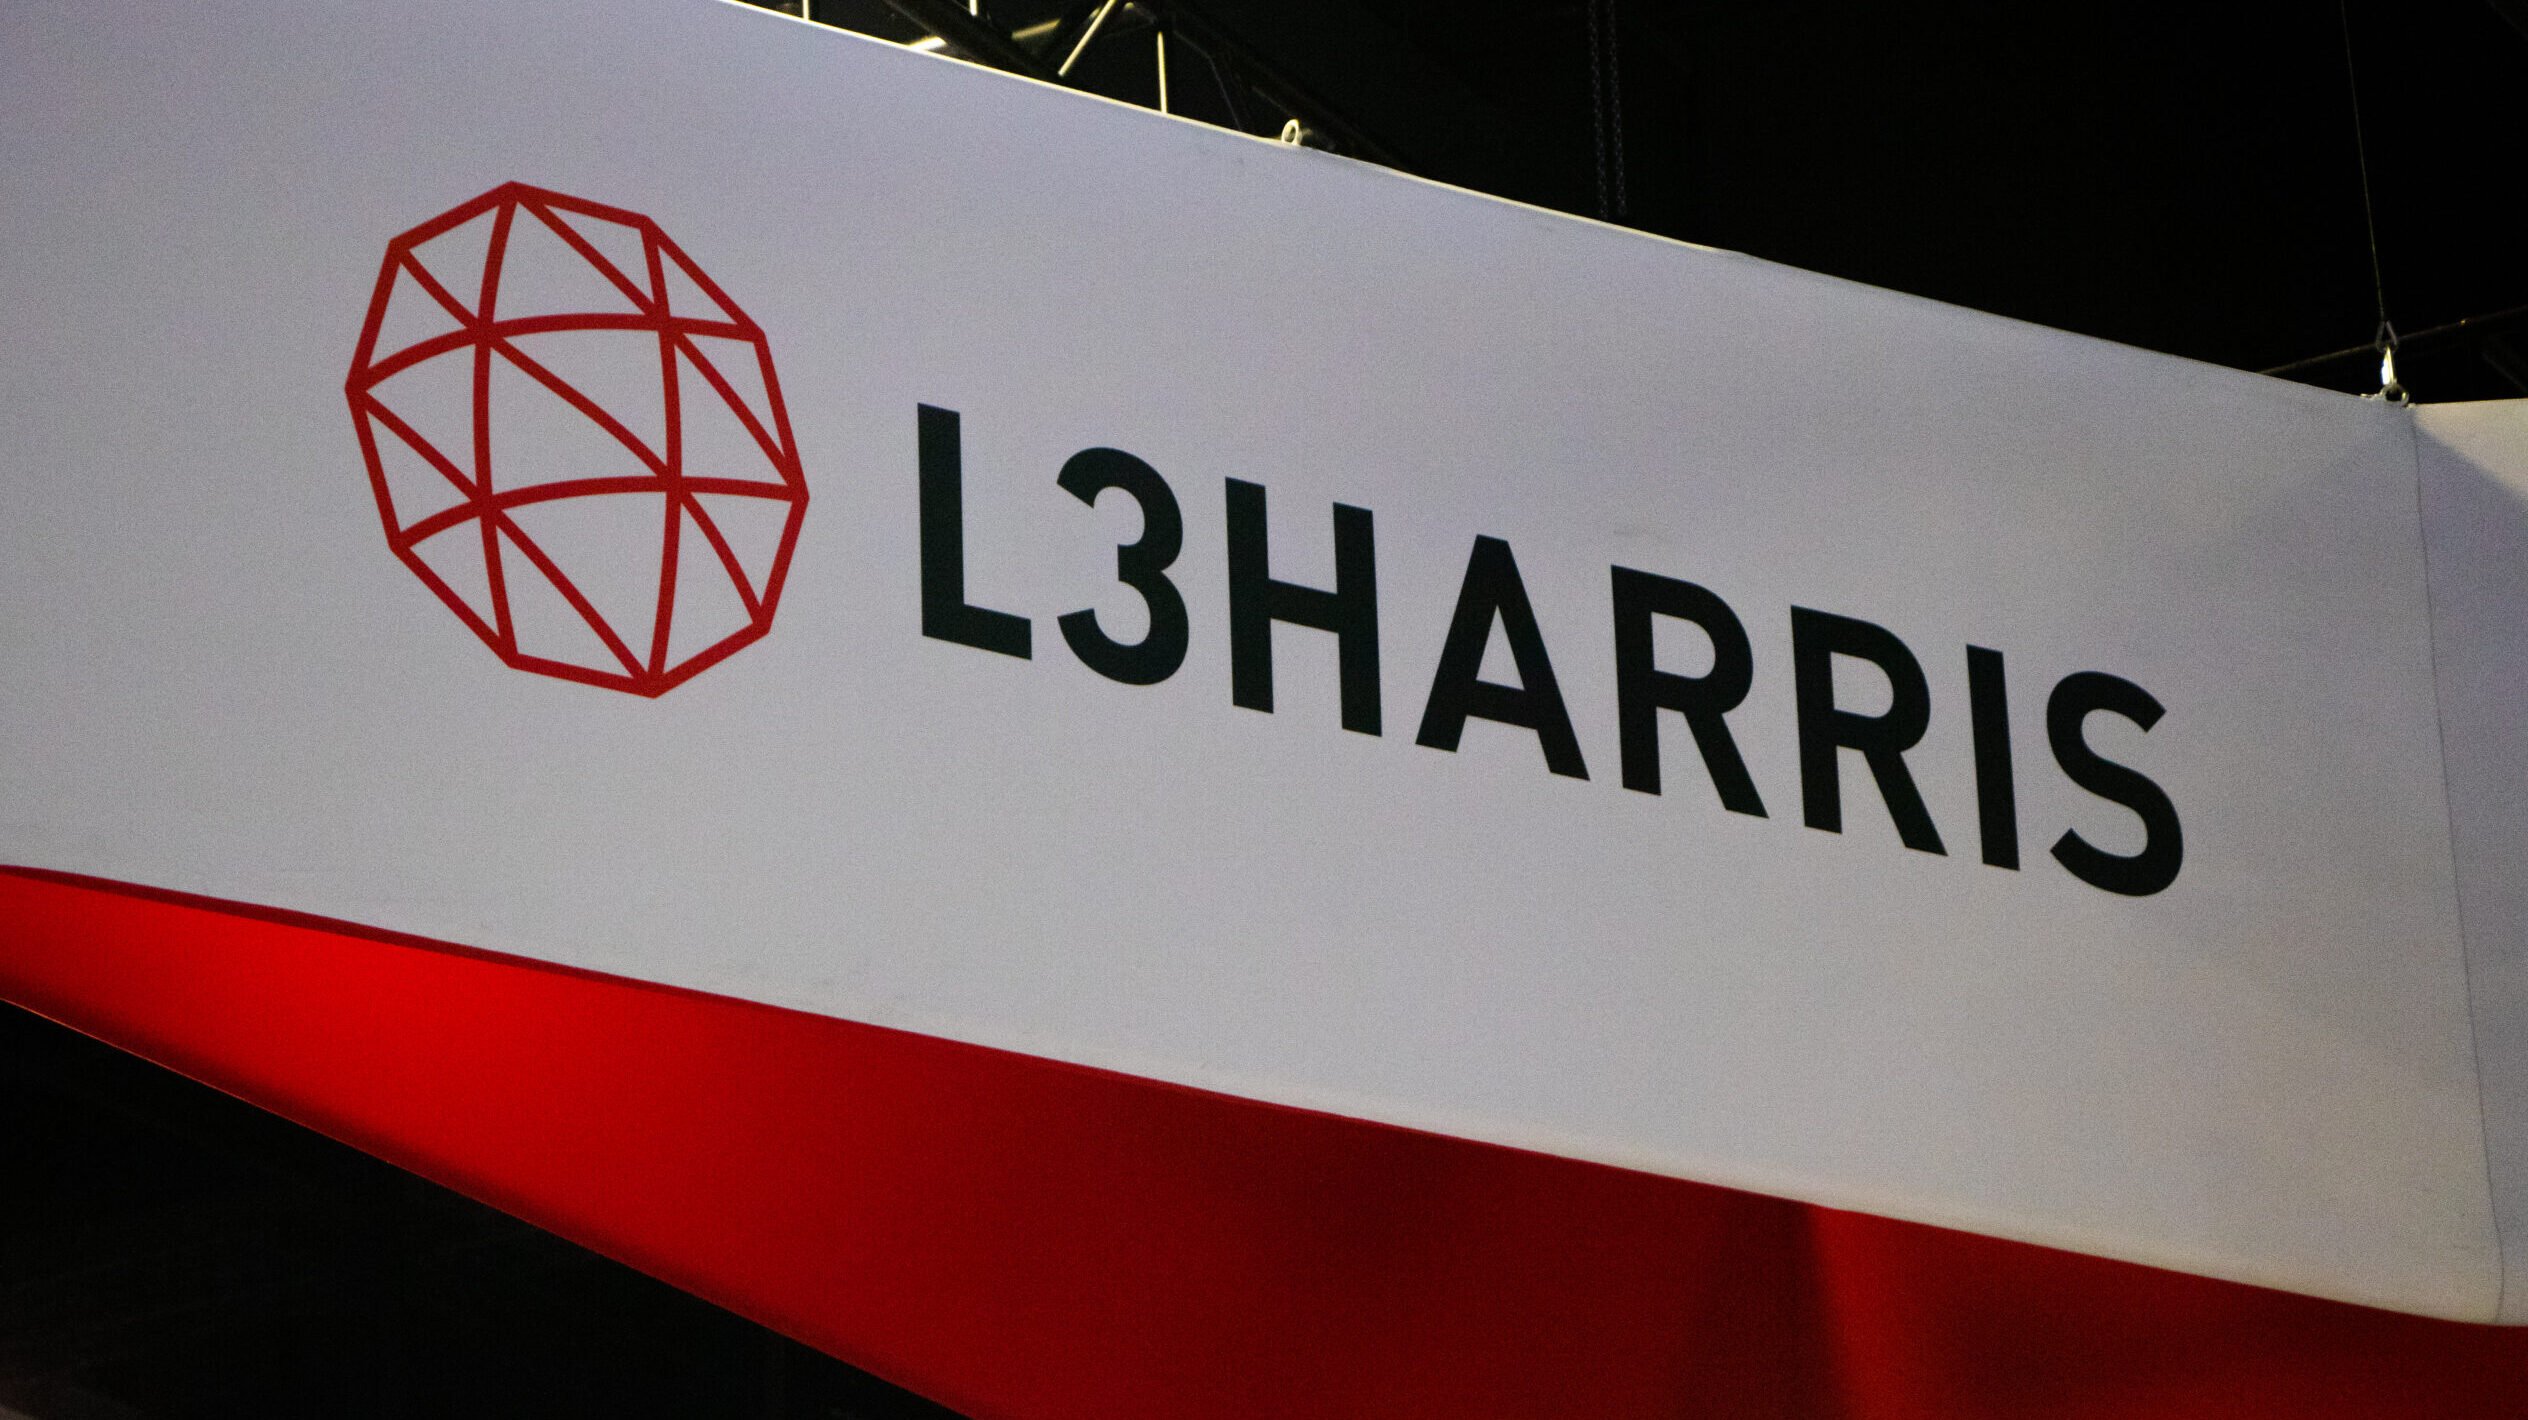 L3Harris selloffs hampered by low bids, CEO says